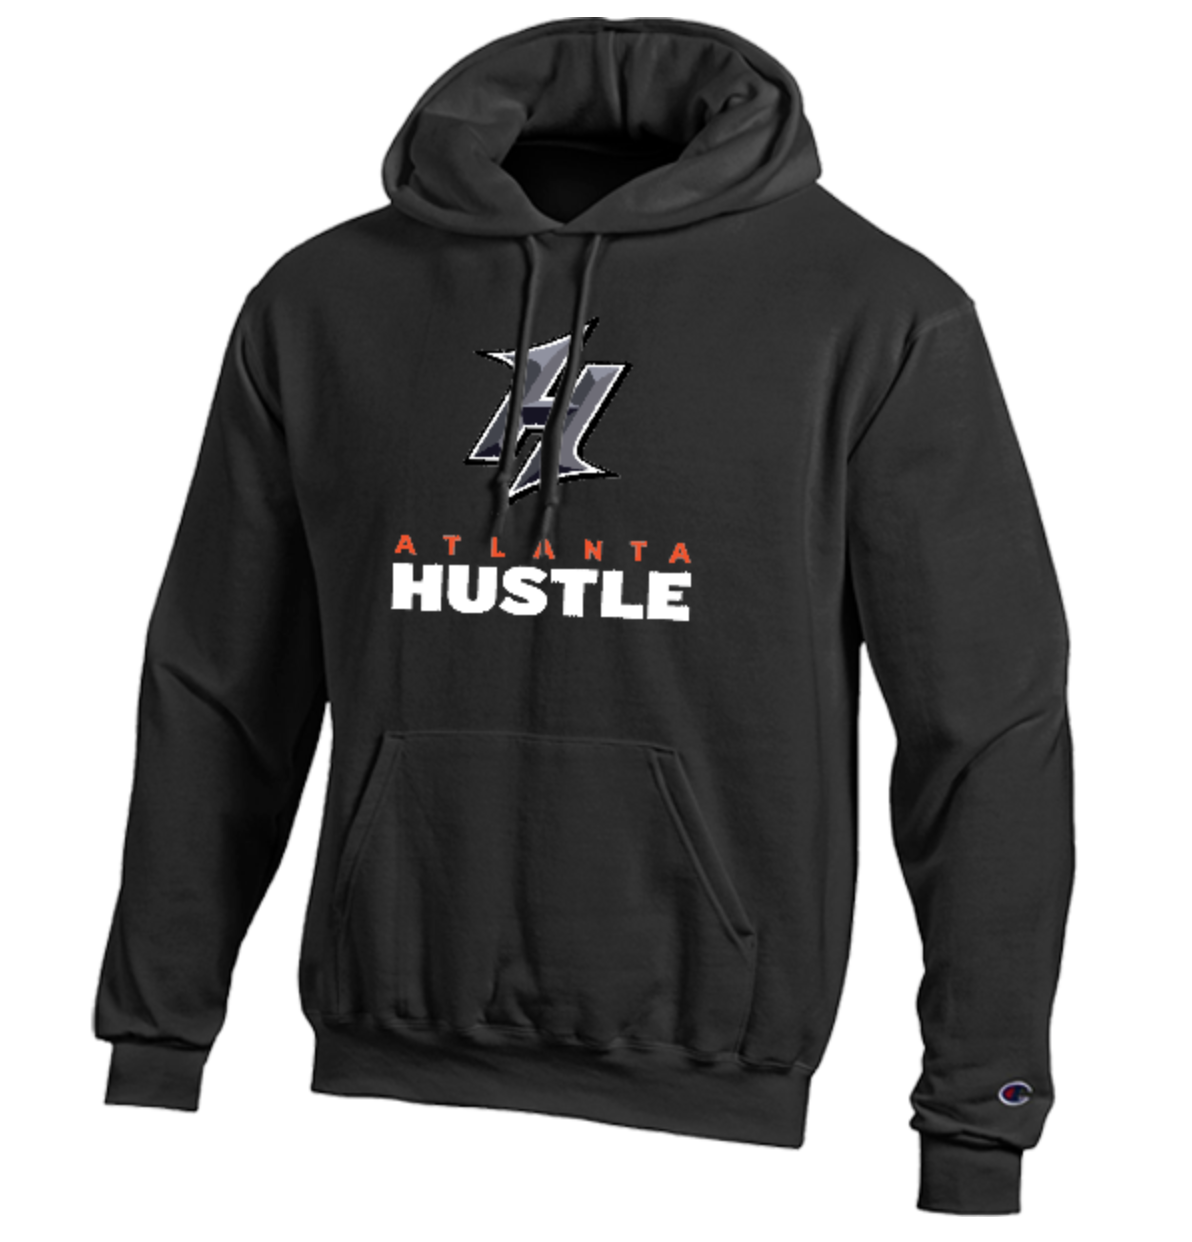 Hustle Champion Sweatshirt - atlantahustle